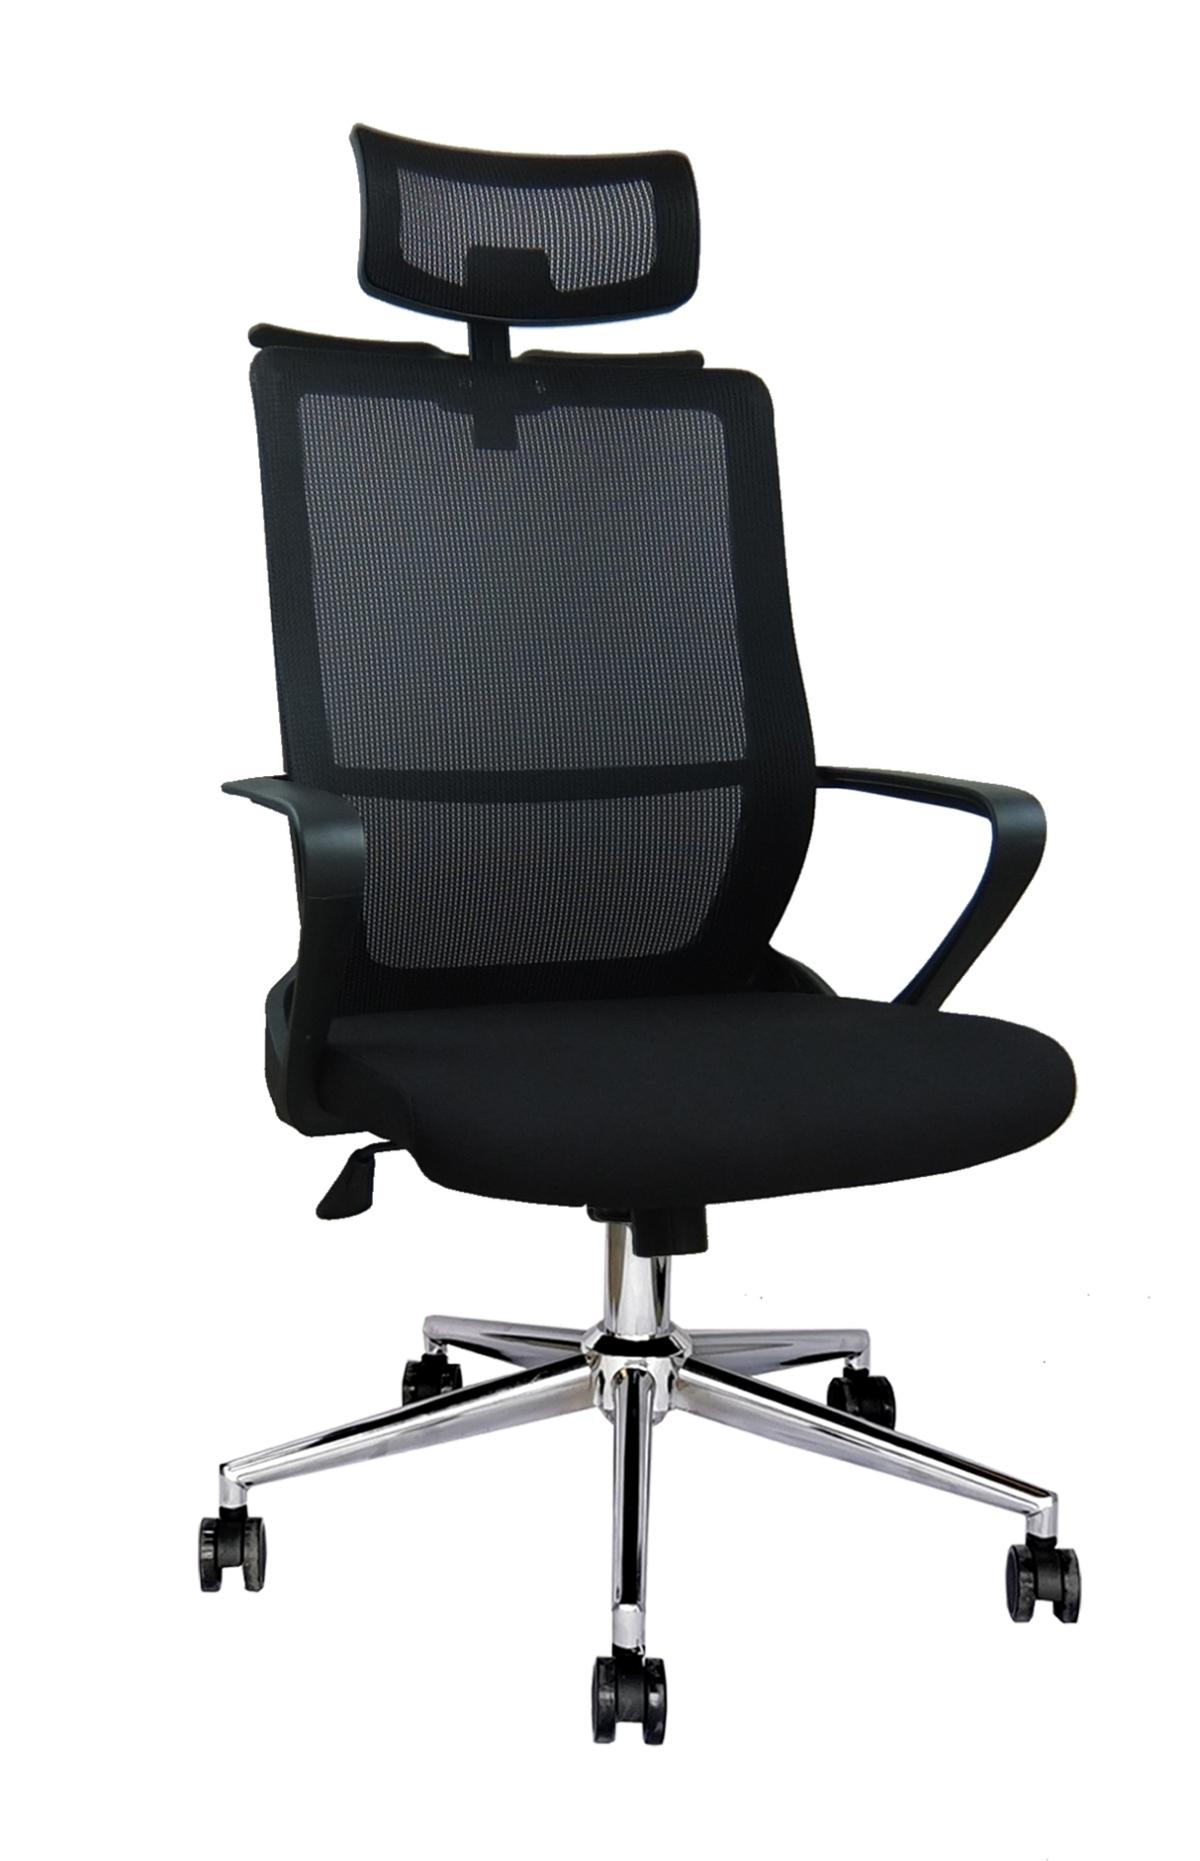 Super chair เก้าอี้ผู้บริหาร ERGO 730 H